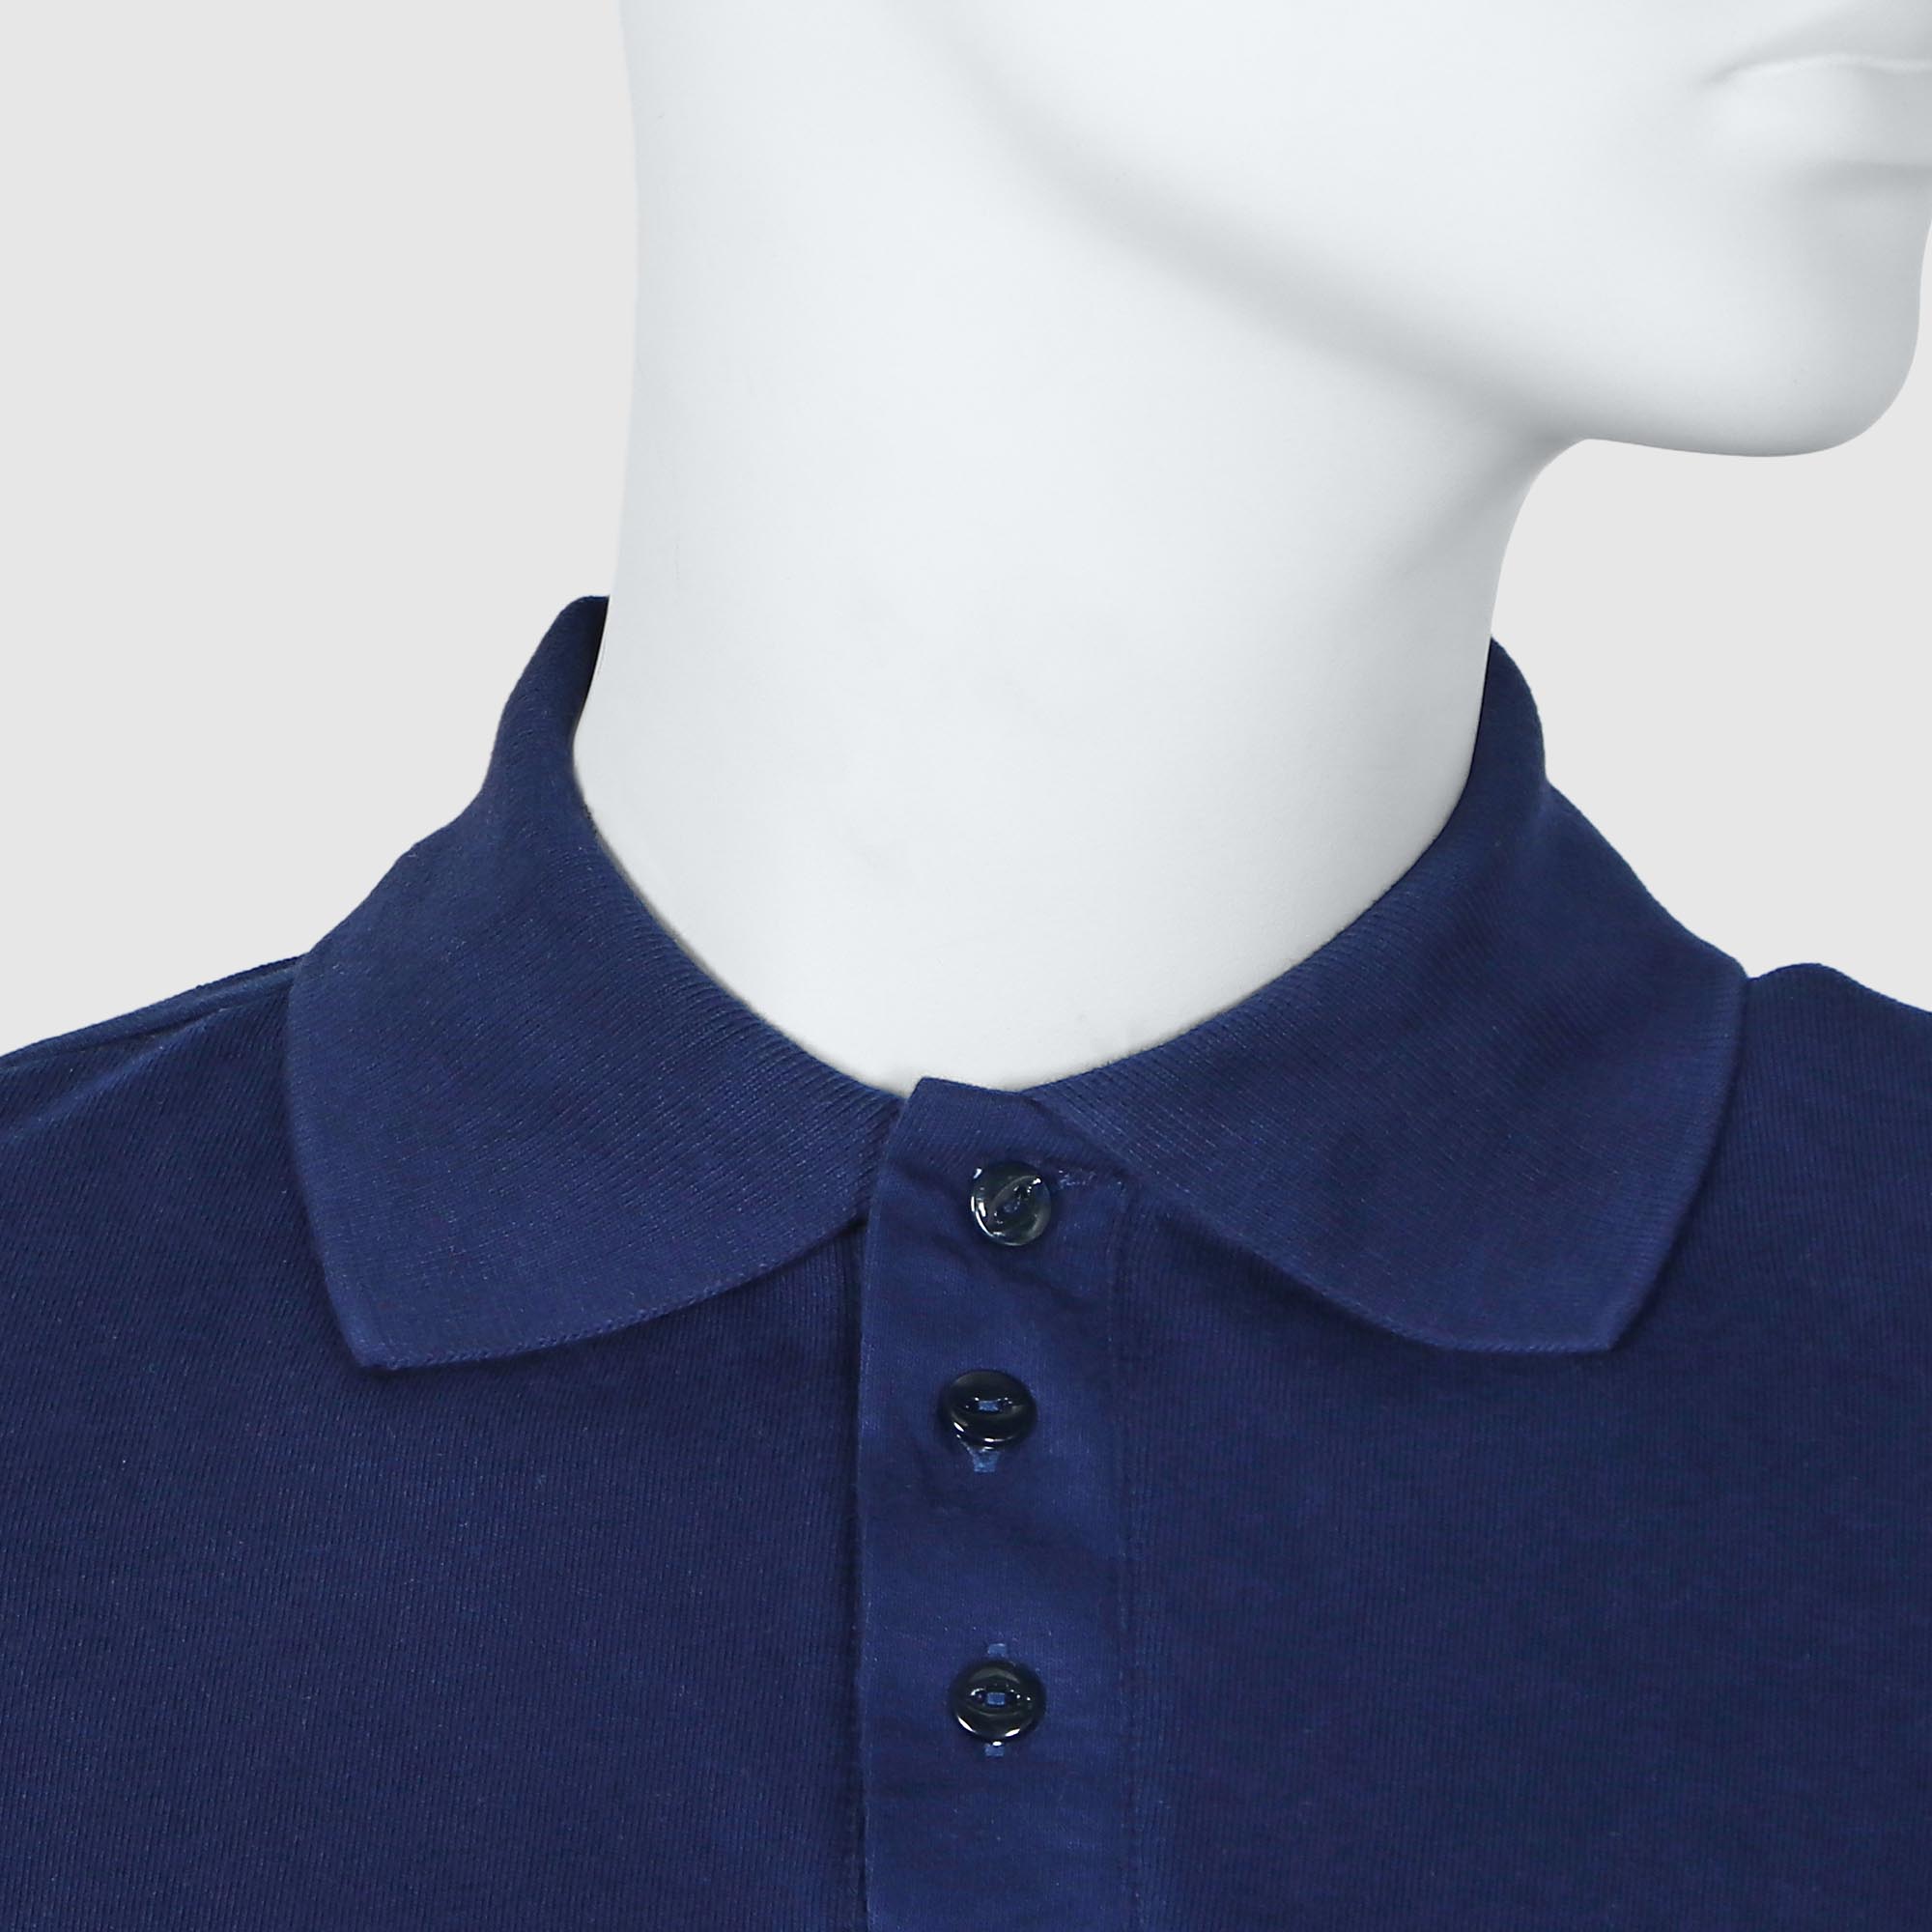 Мужская футболка-поло Diva Teks синяя (DTD-10), цвет синий, размер 44-46 - фото 4